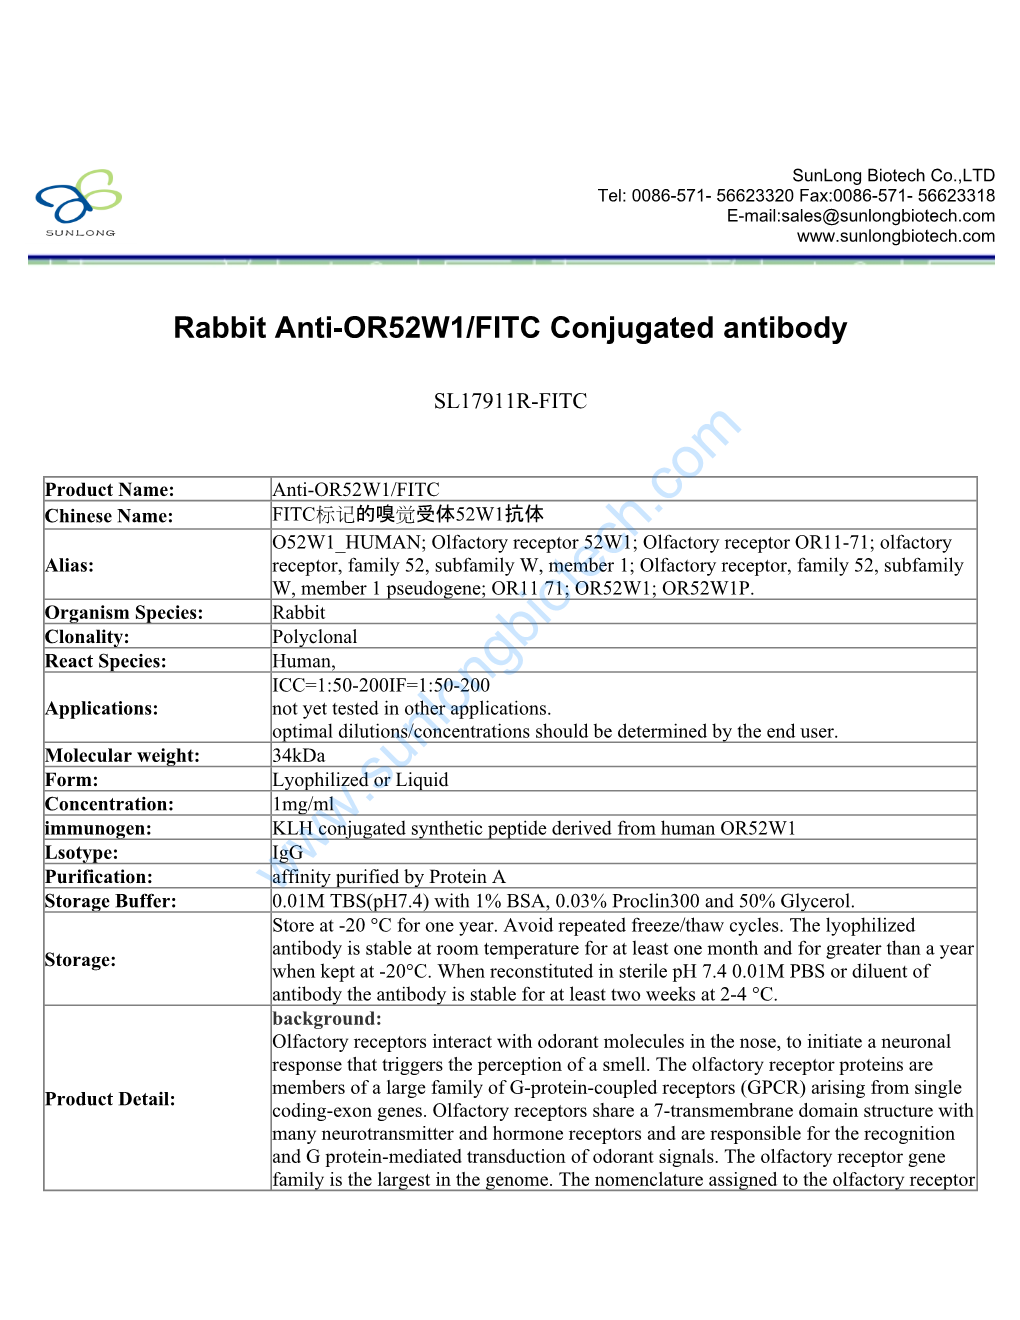 Rabbit Anti-OR52W1/FITC Conjugated Antibody